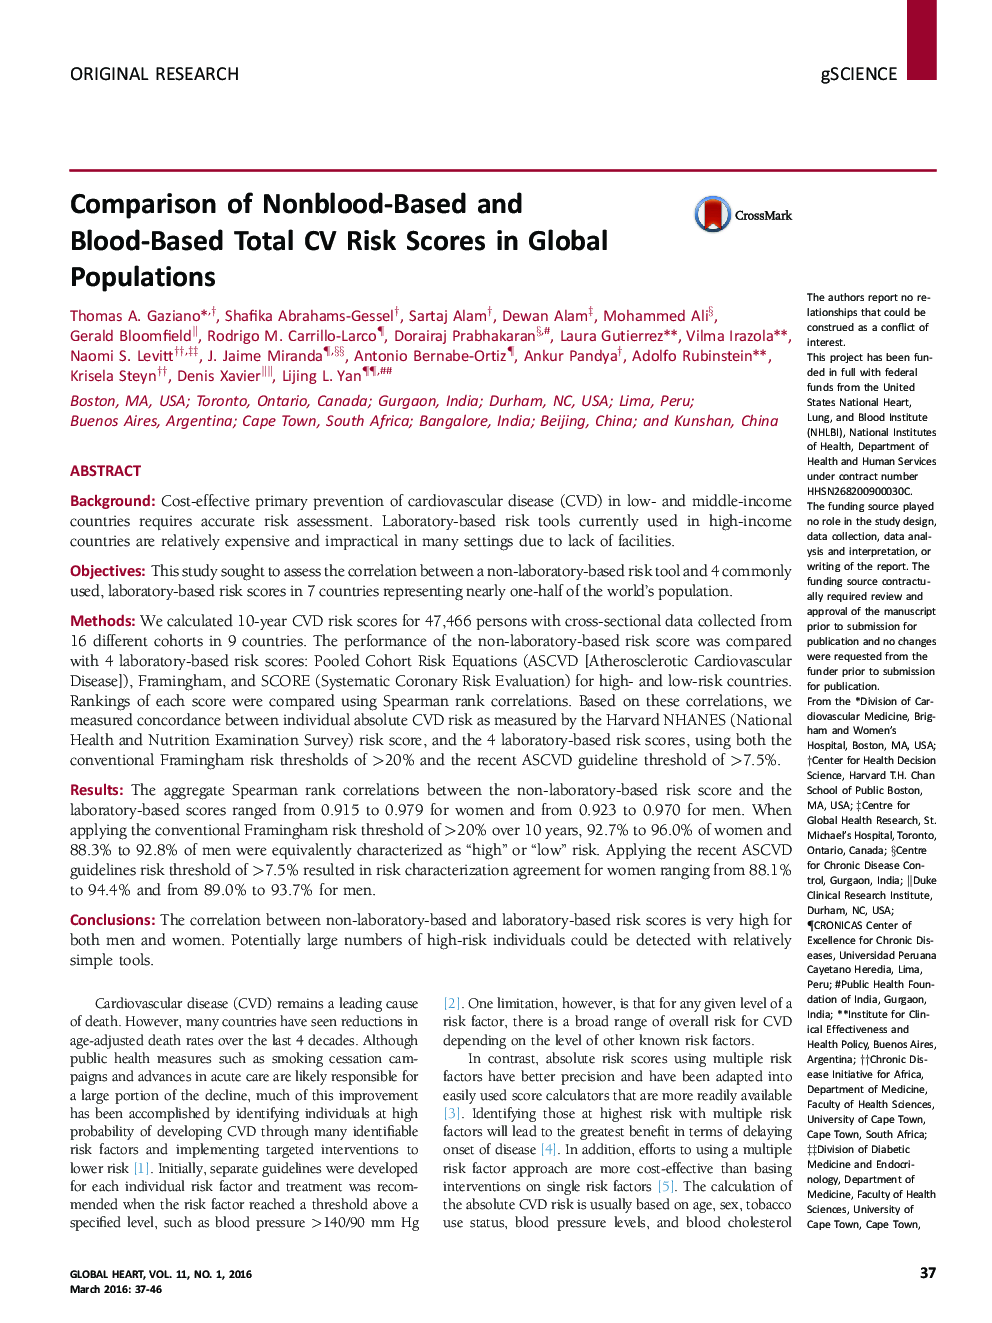 Original ResearchComparison of Nonblood-Based and Blood-Based Total CV Risk Scores in Global Populations